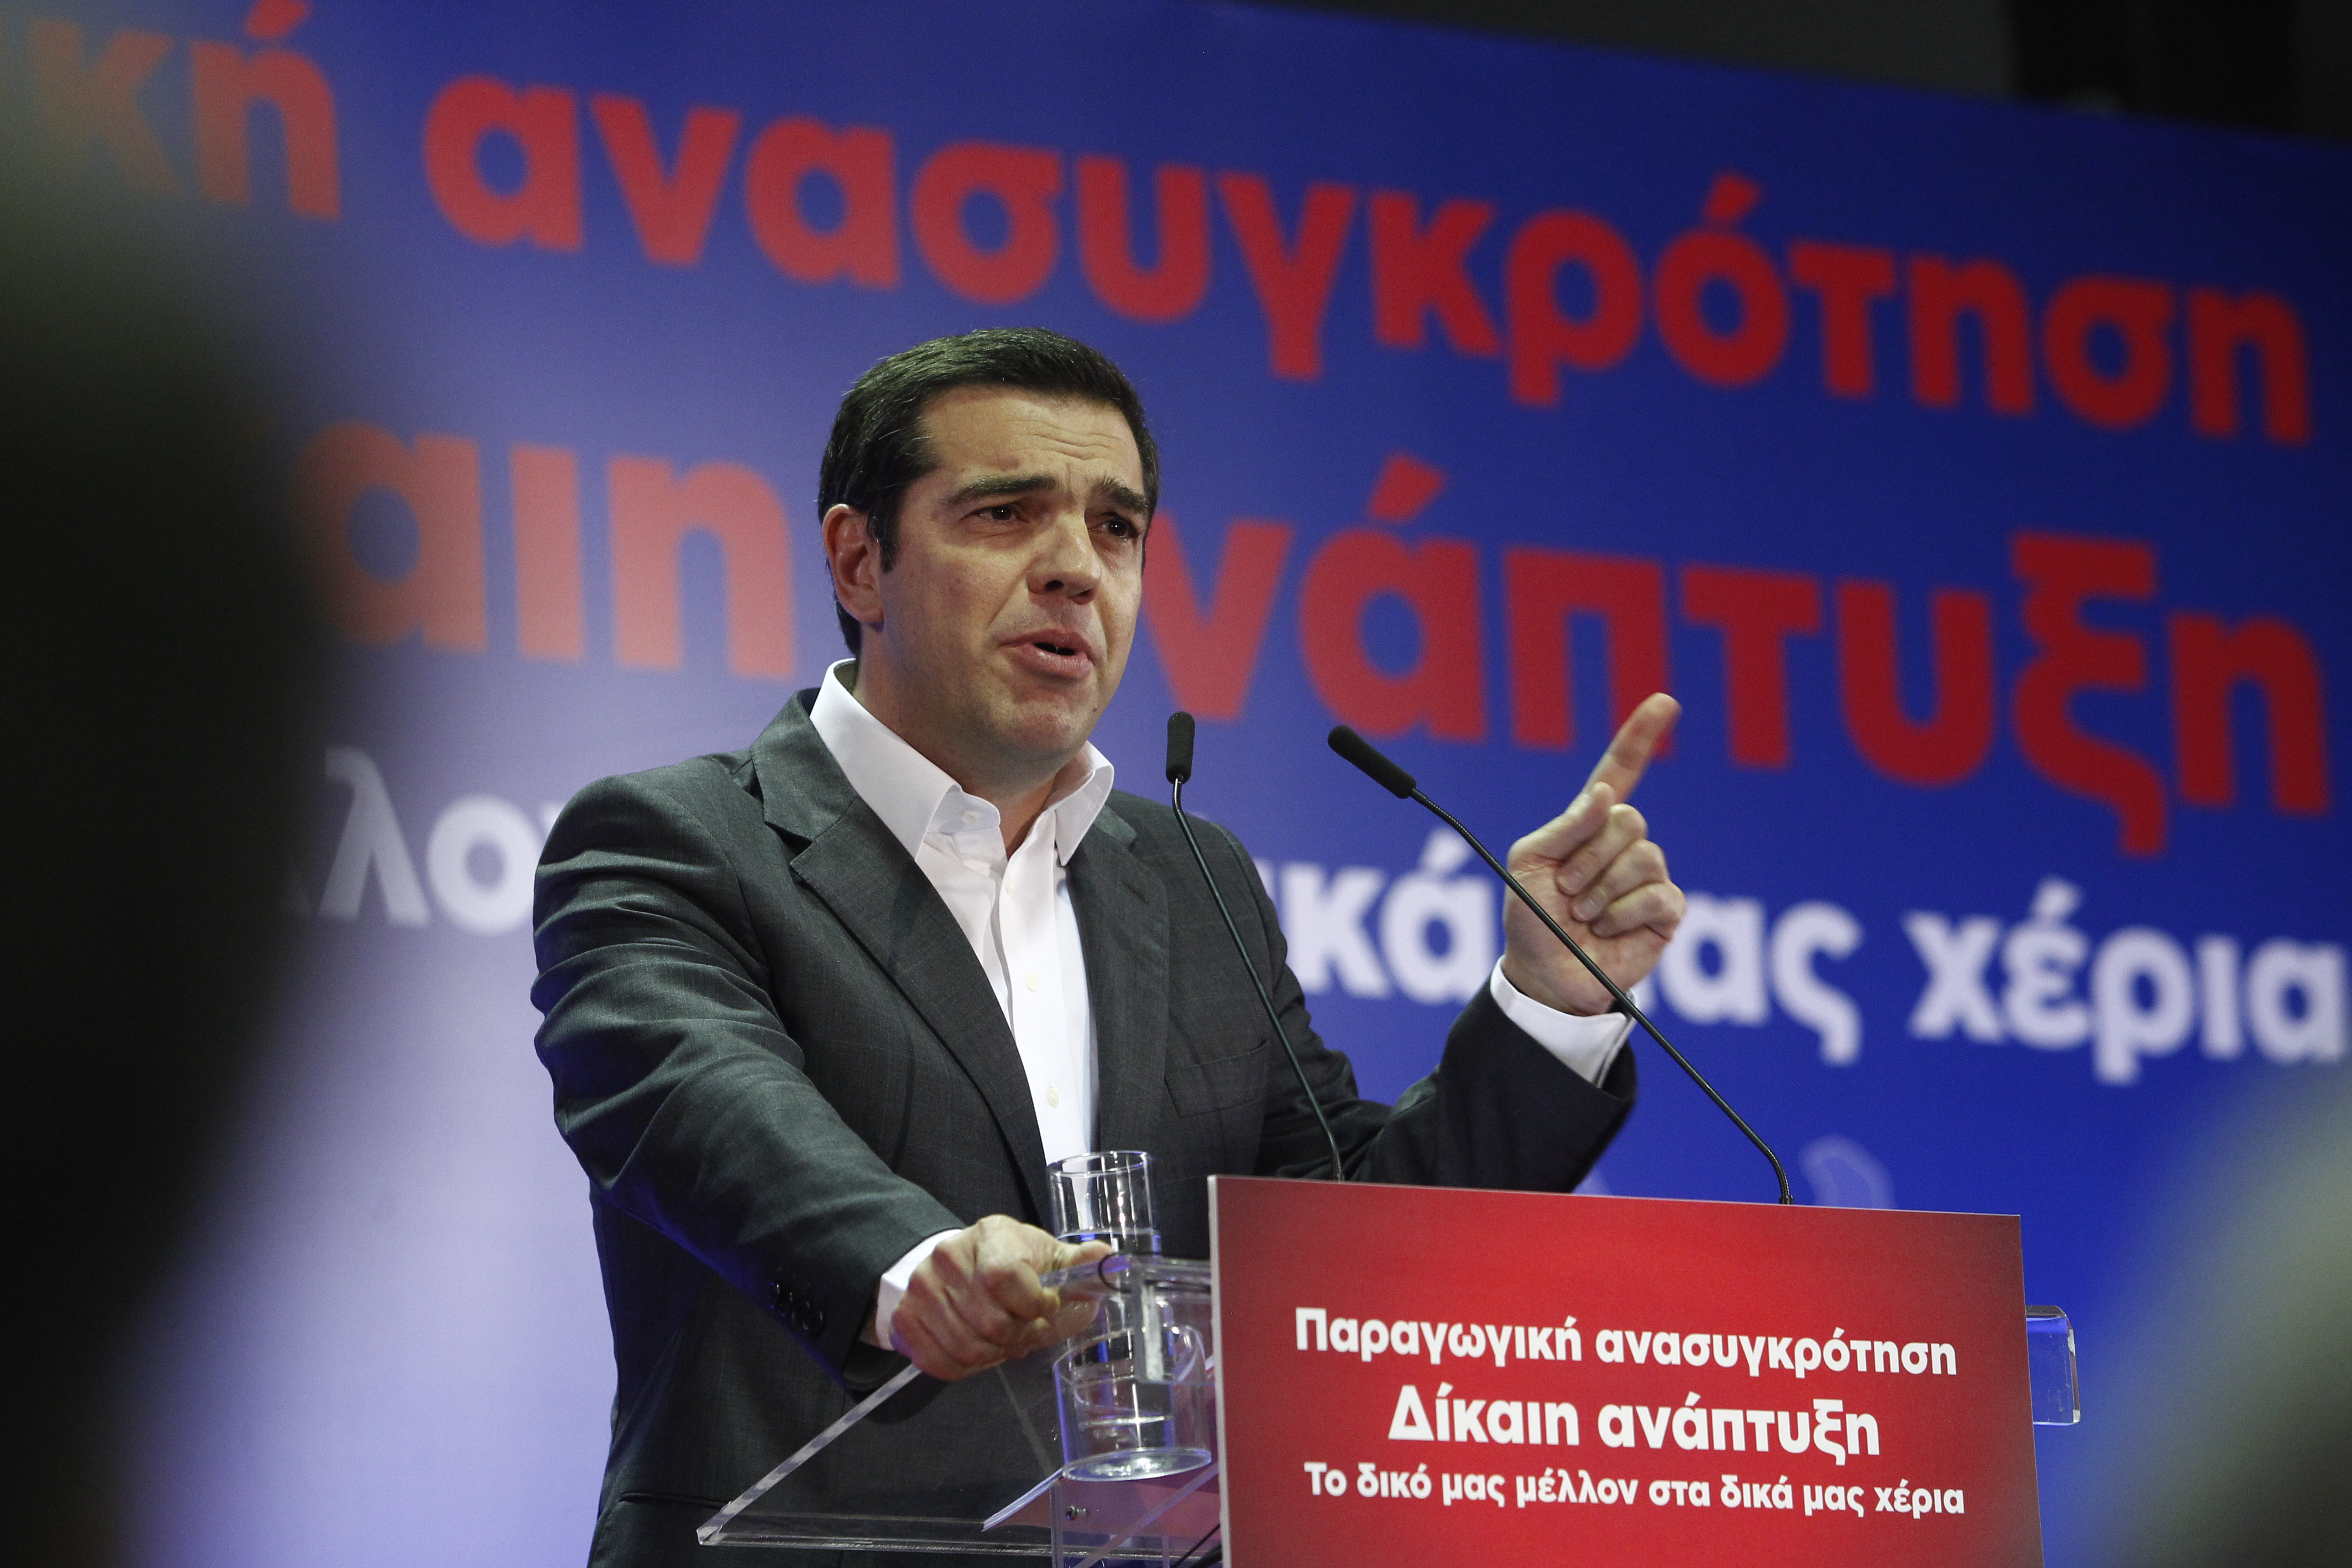 Tsipras’ dark plan